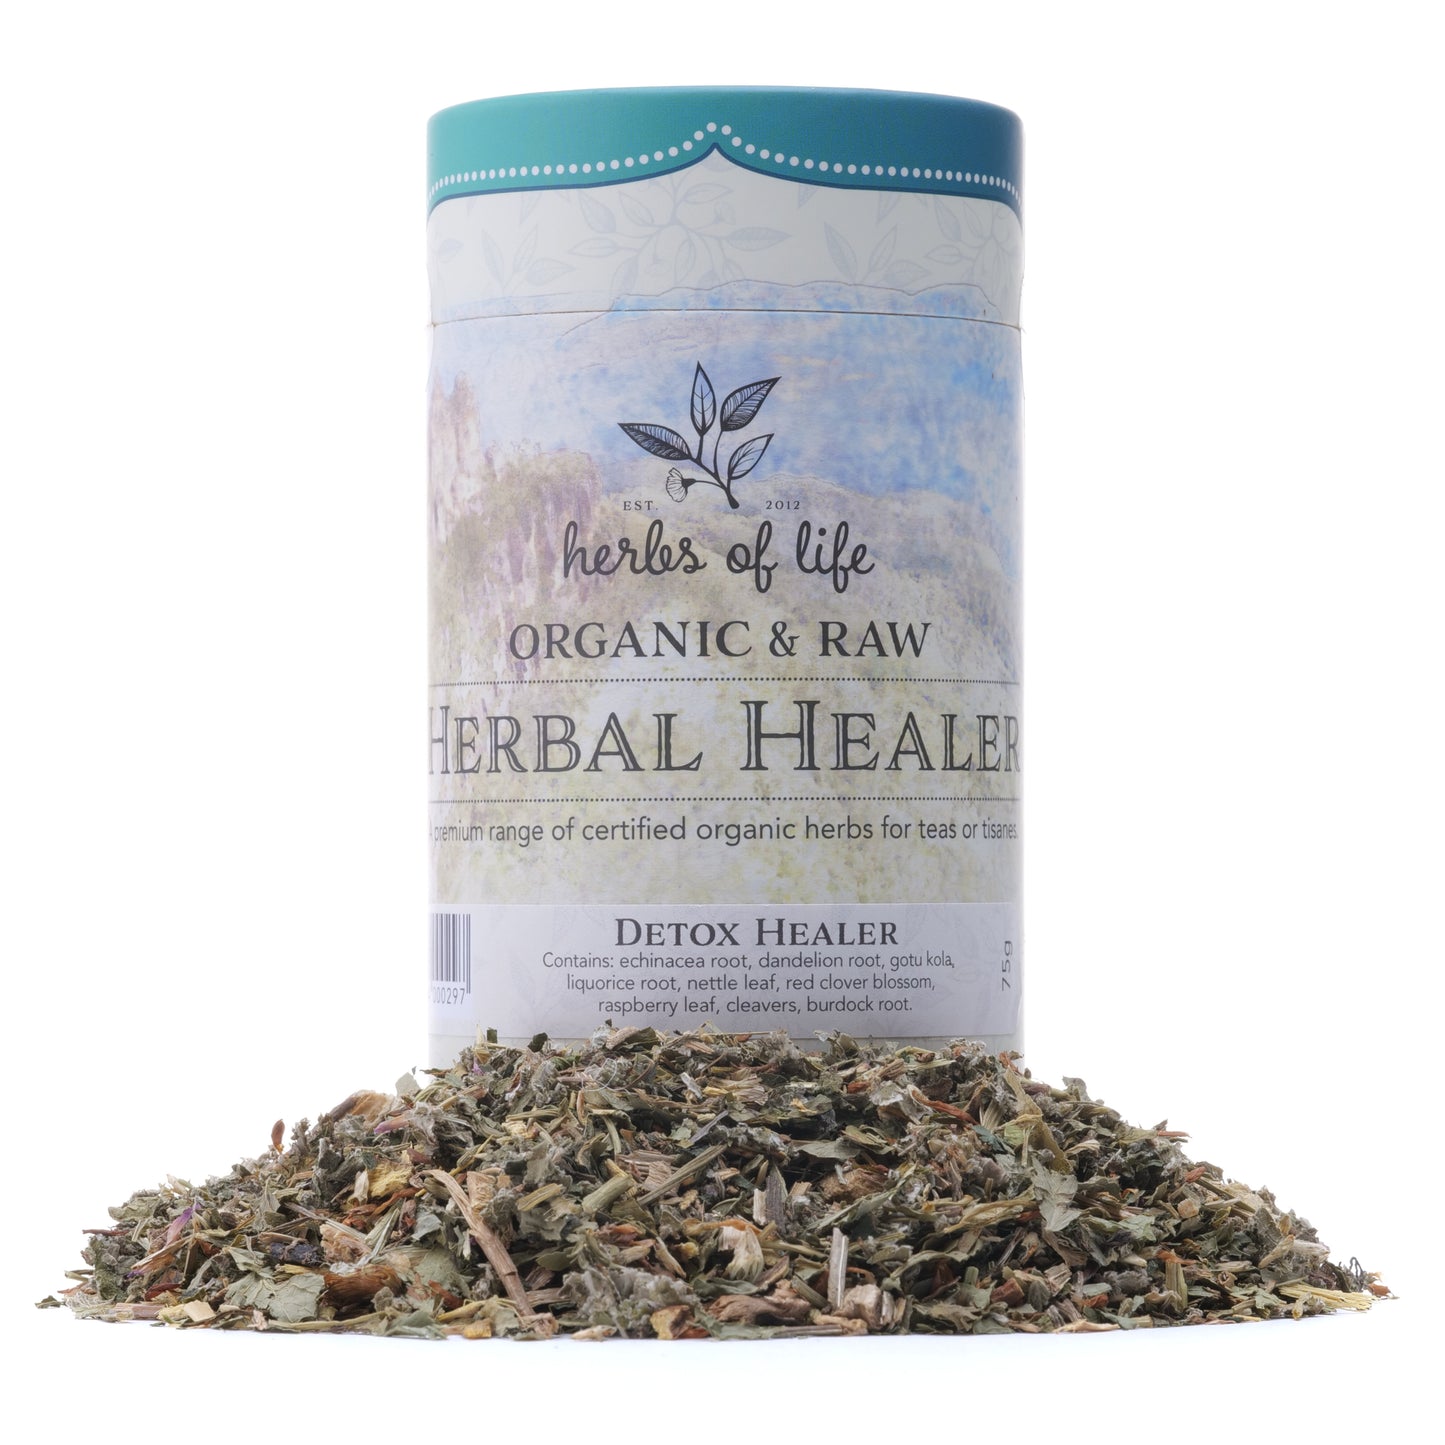 Herbal Healer - Detox Healer